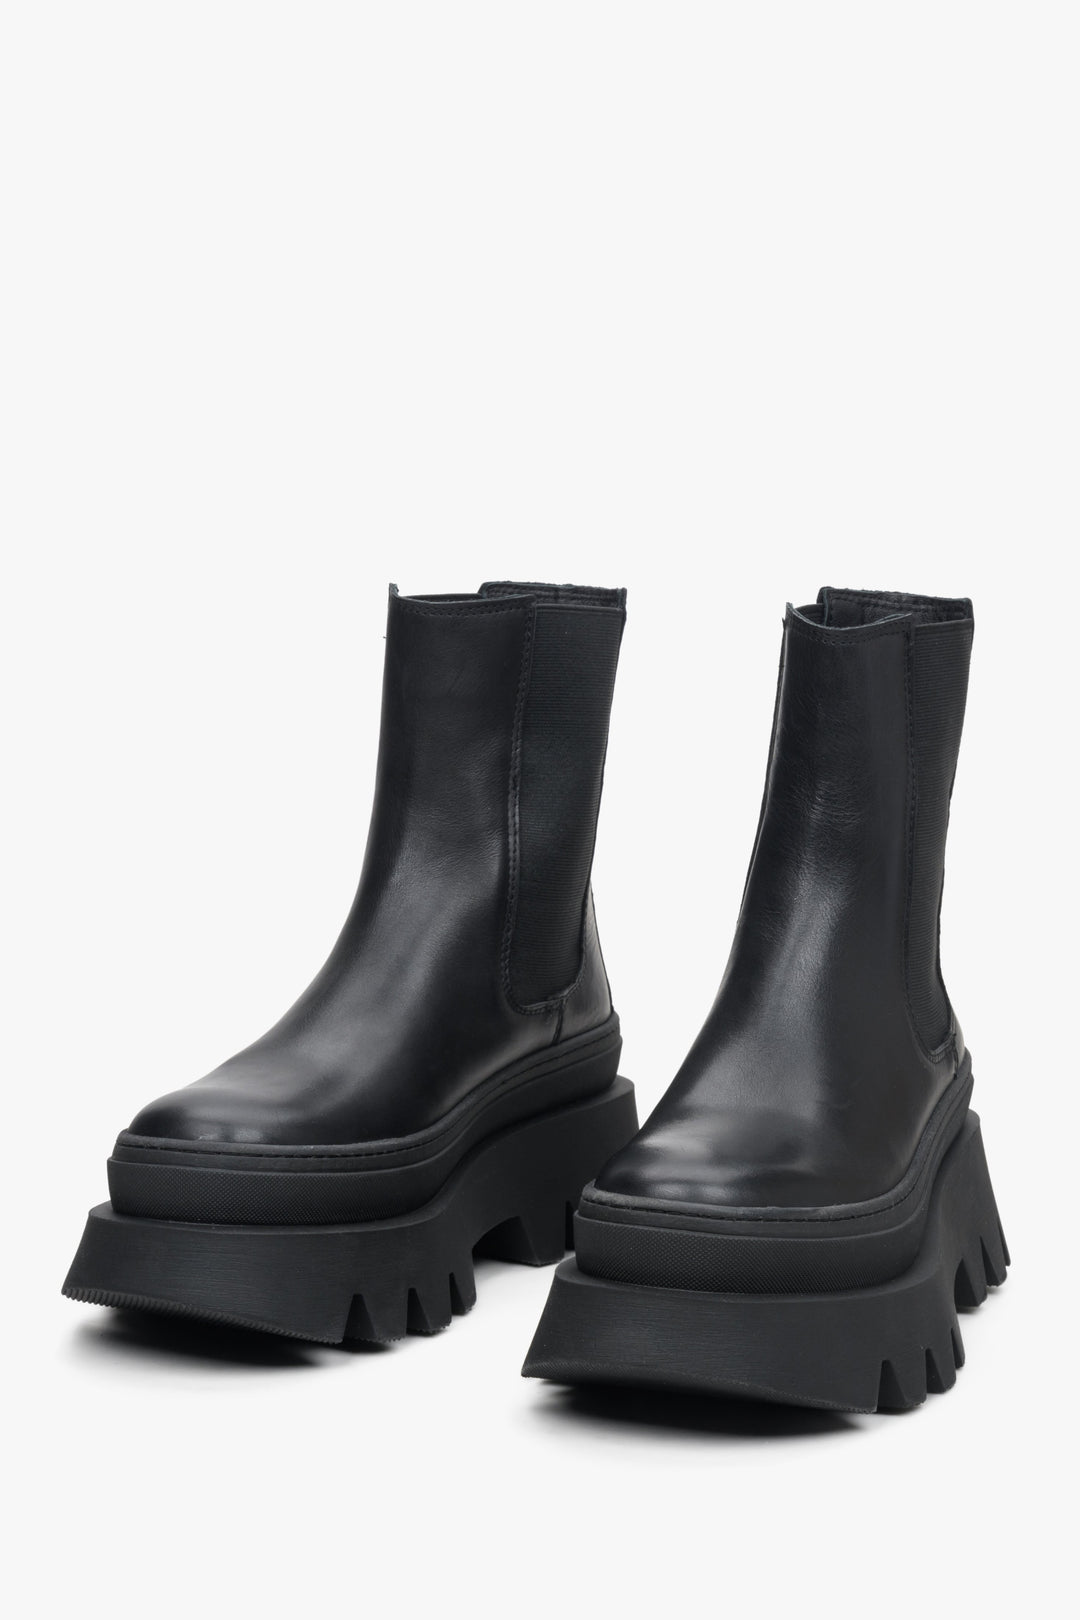 Women's black platform chelsea boots by Estro - close-up on the toe.